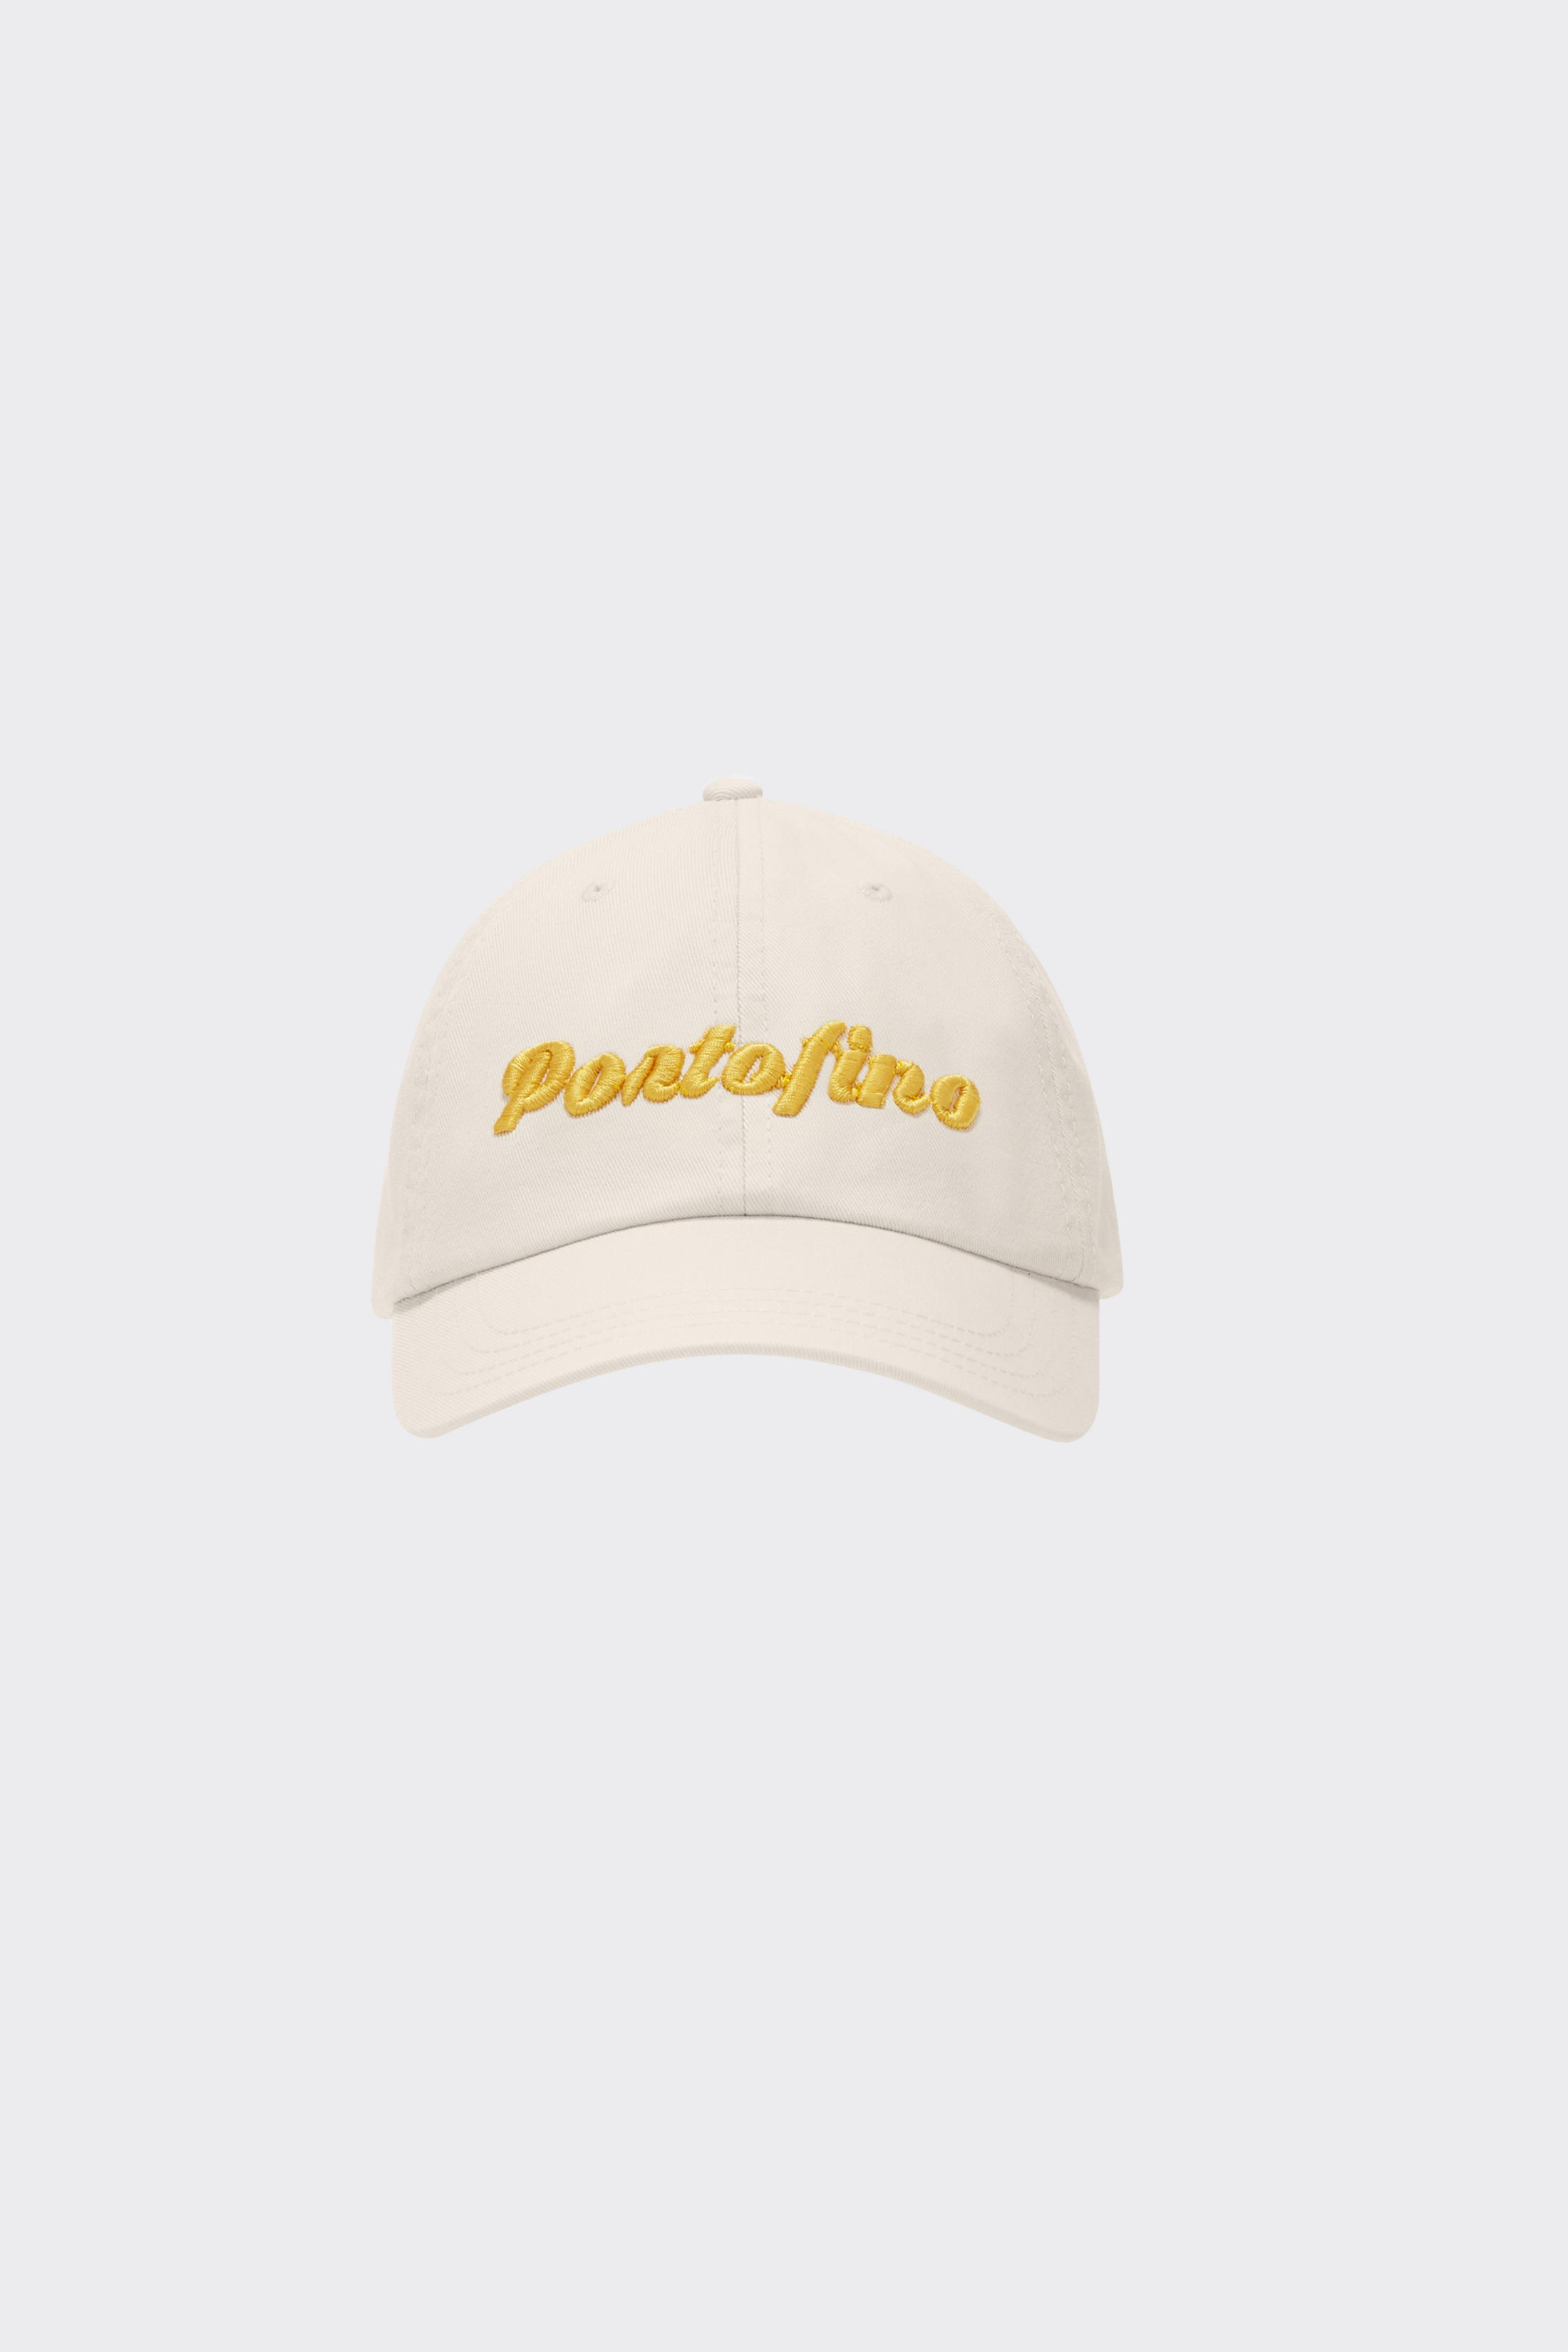 "Portofino" Cap Off-White and Yellow